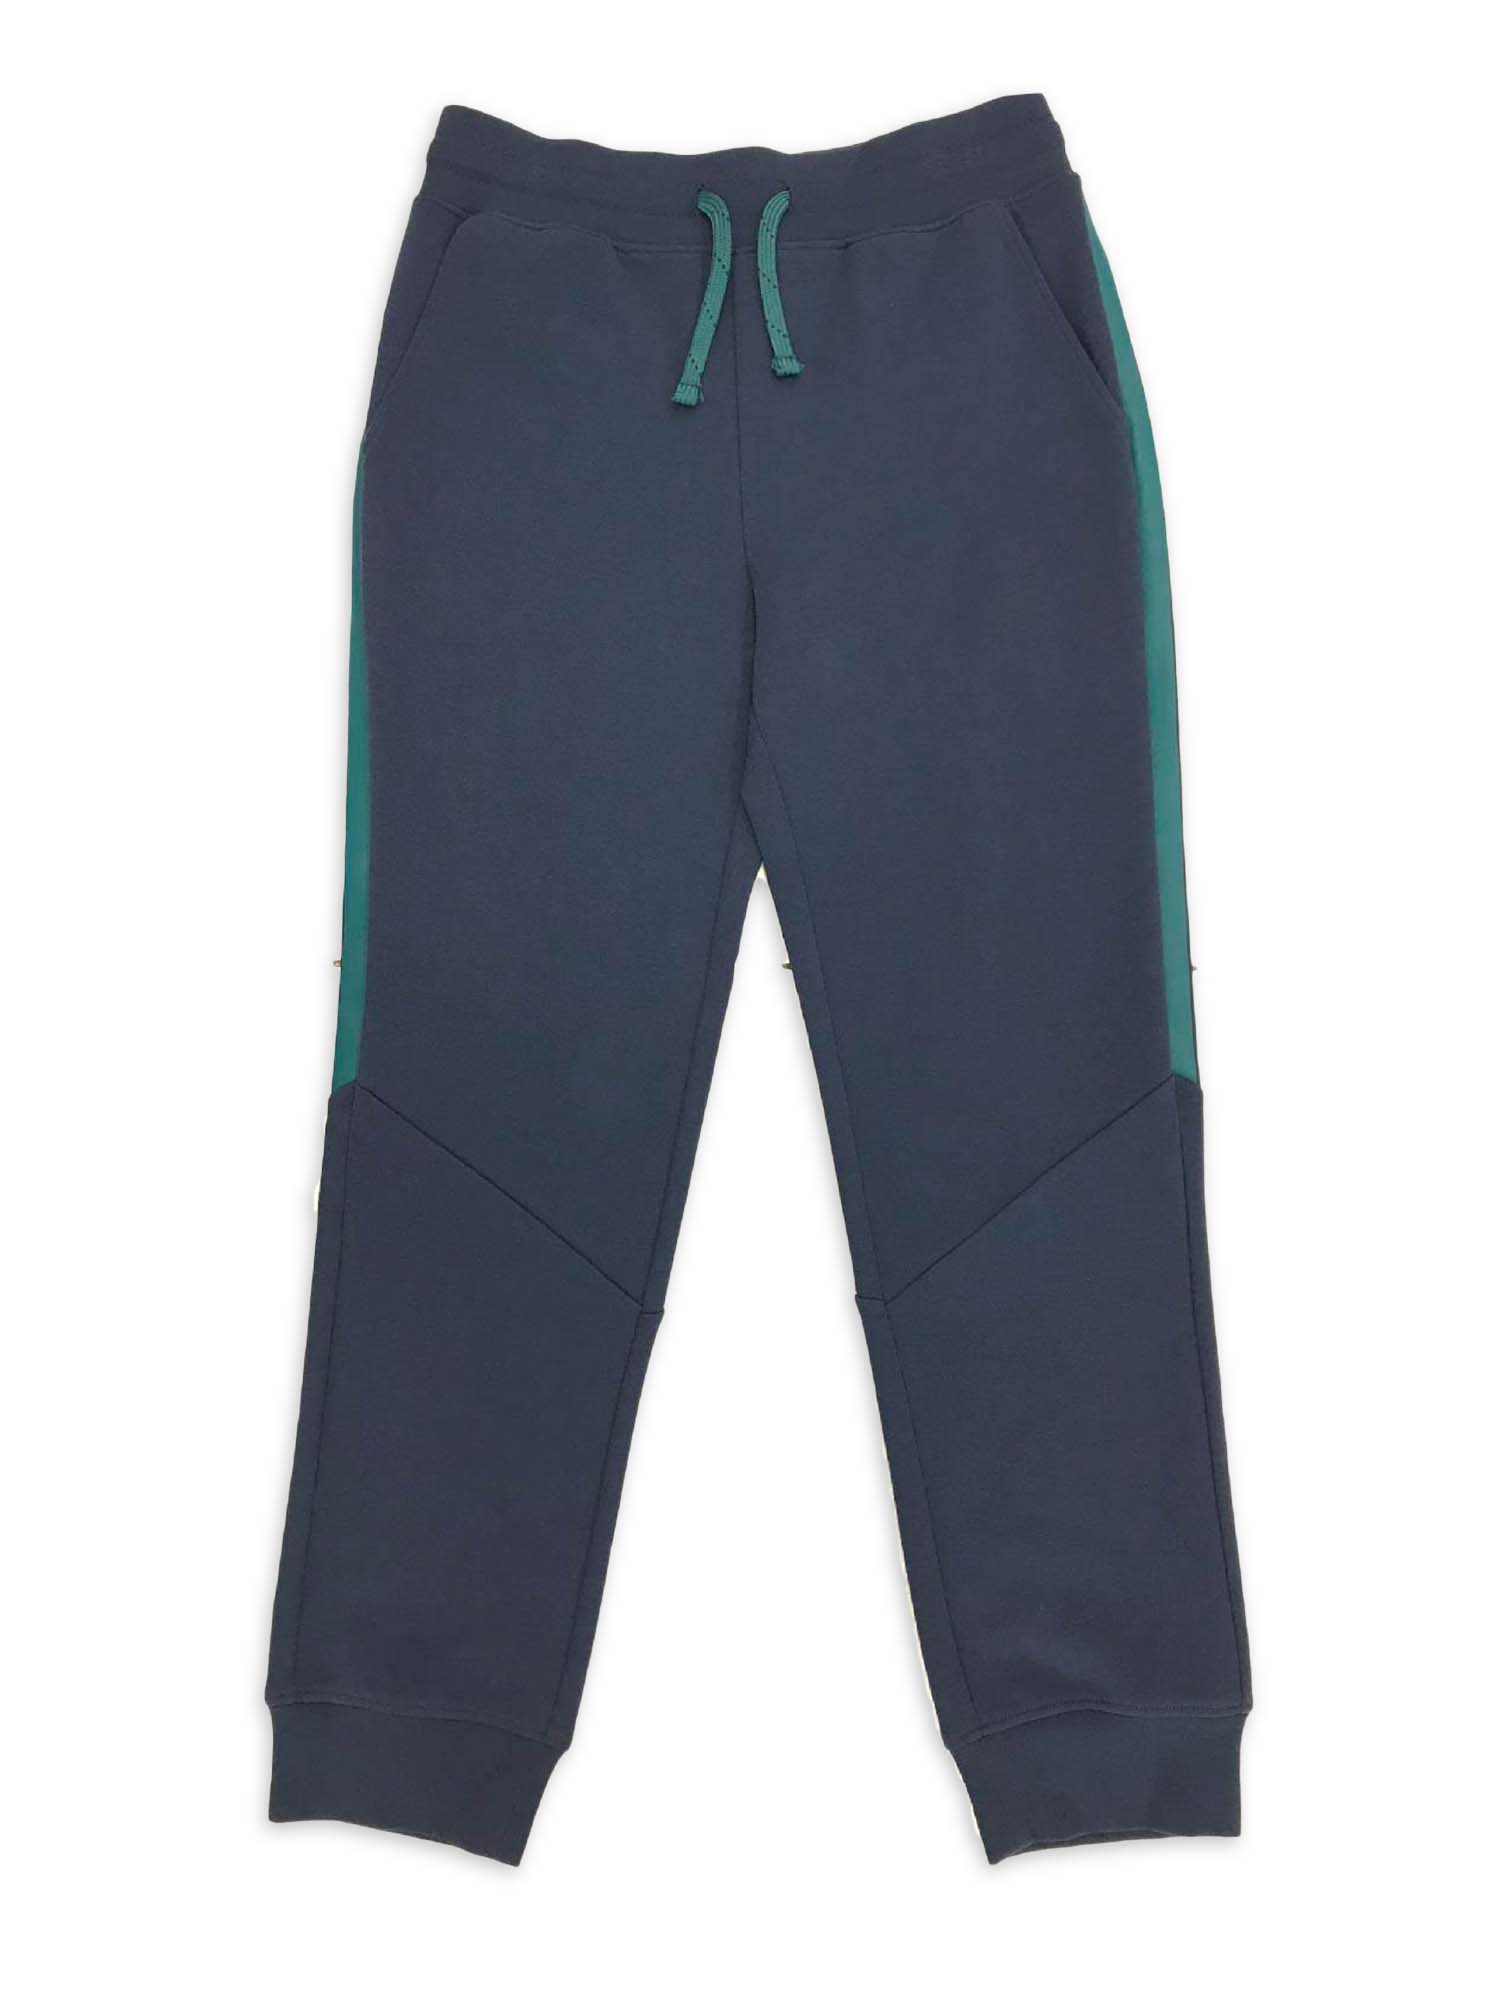 Athletic Works Boys Knit Jogger Sweatpants Sizes 4-18 & Husky - image 1 of 3